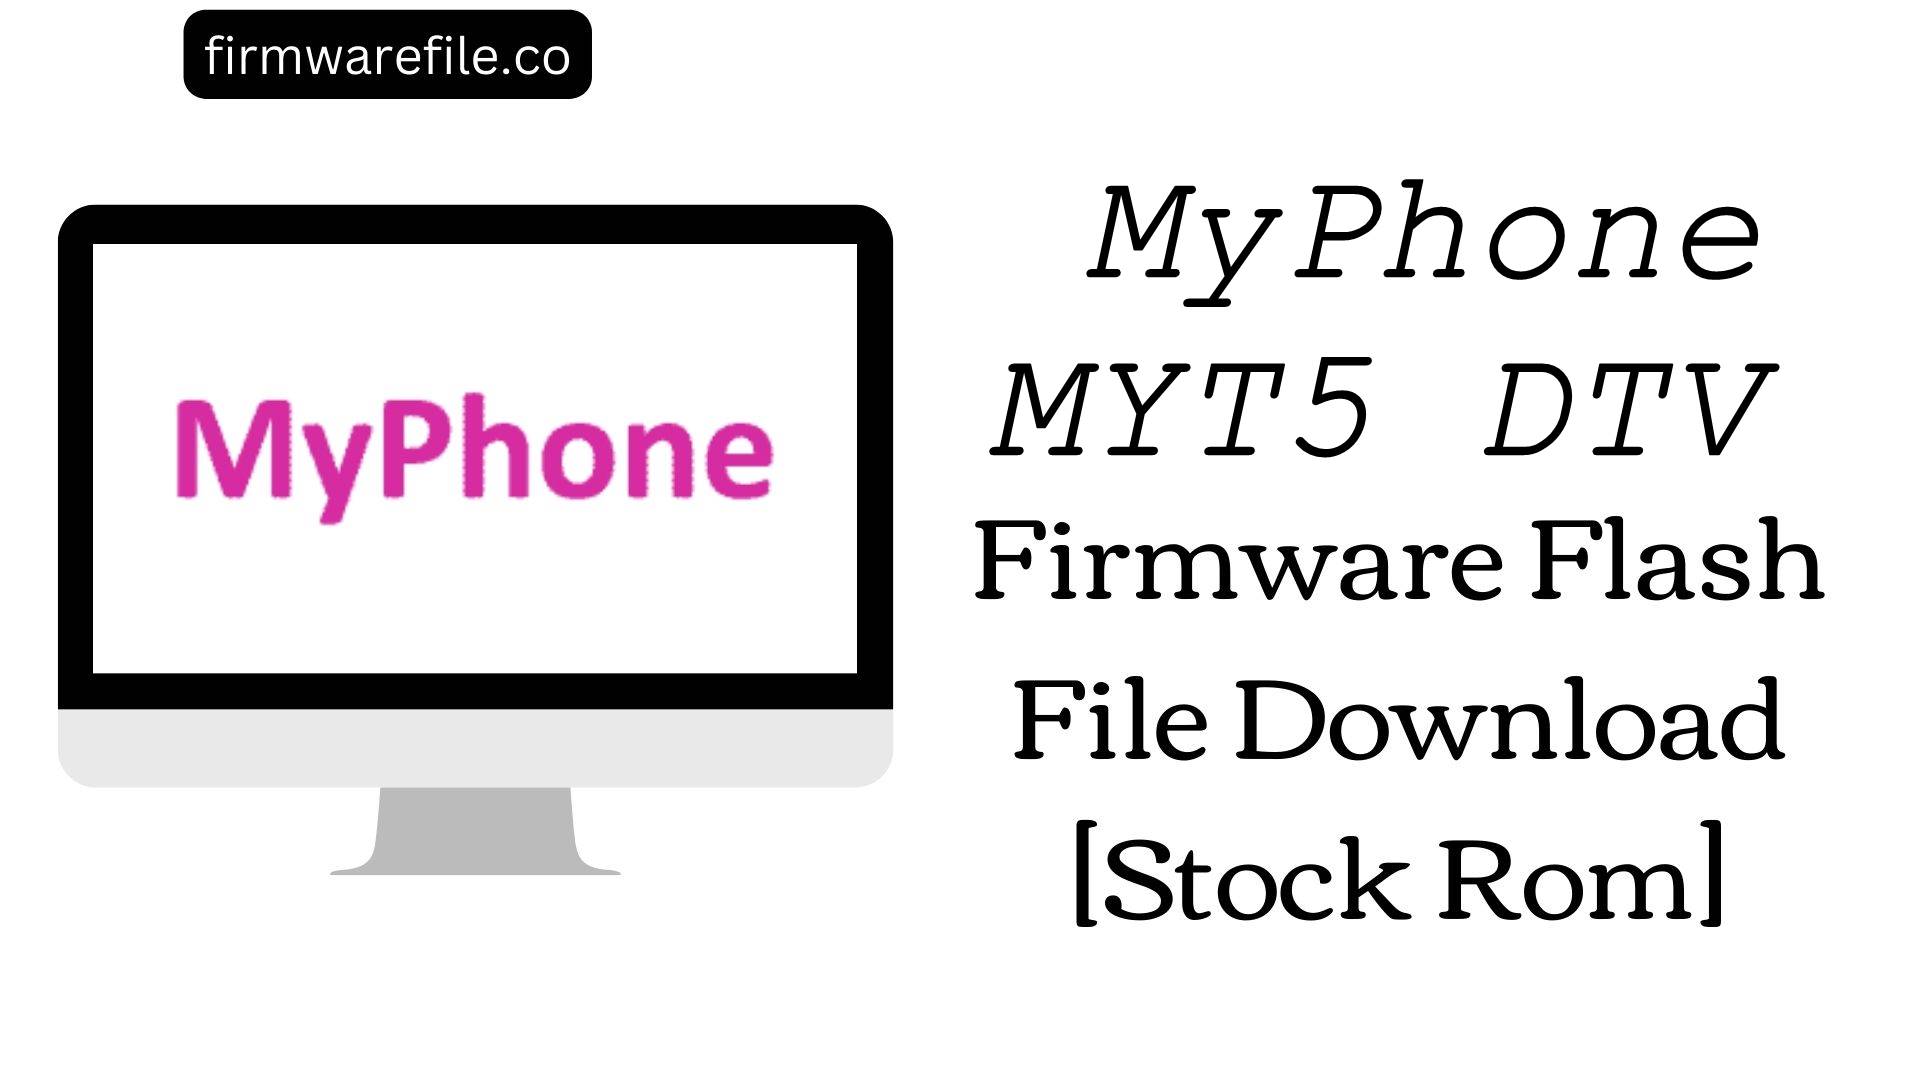 MyPhone MYT5 DTV